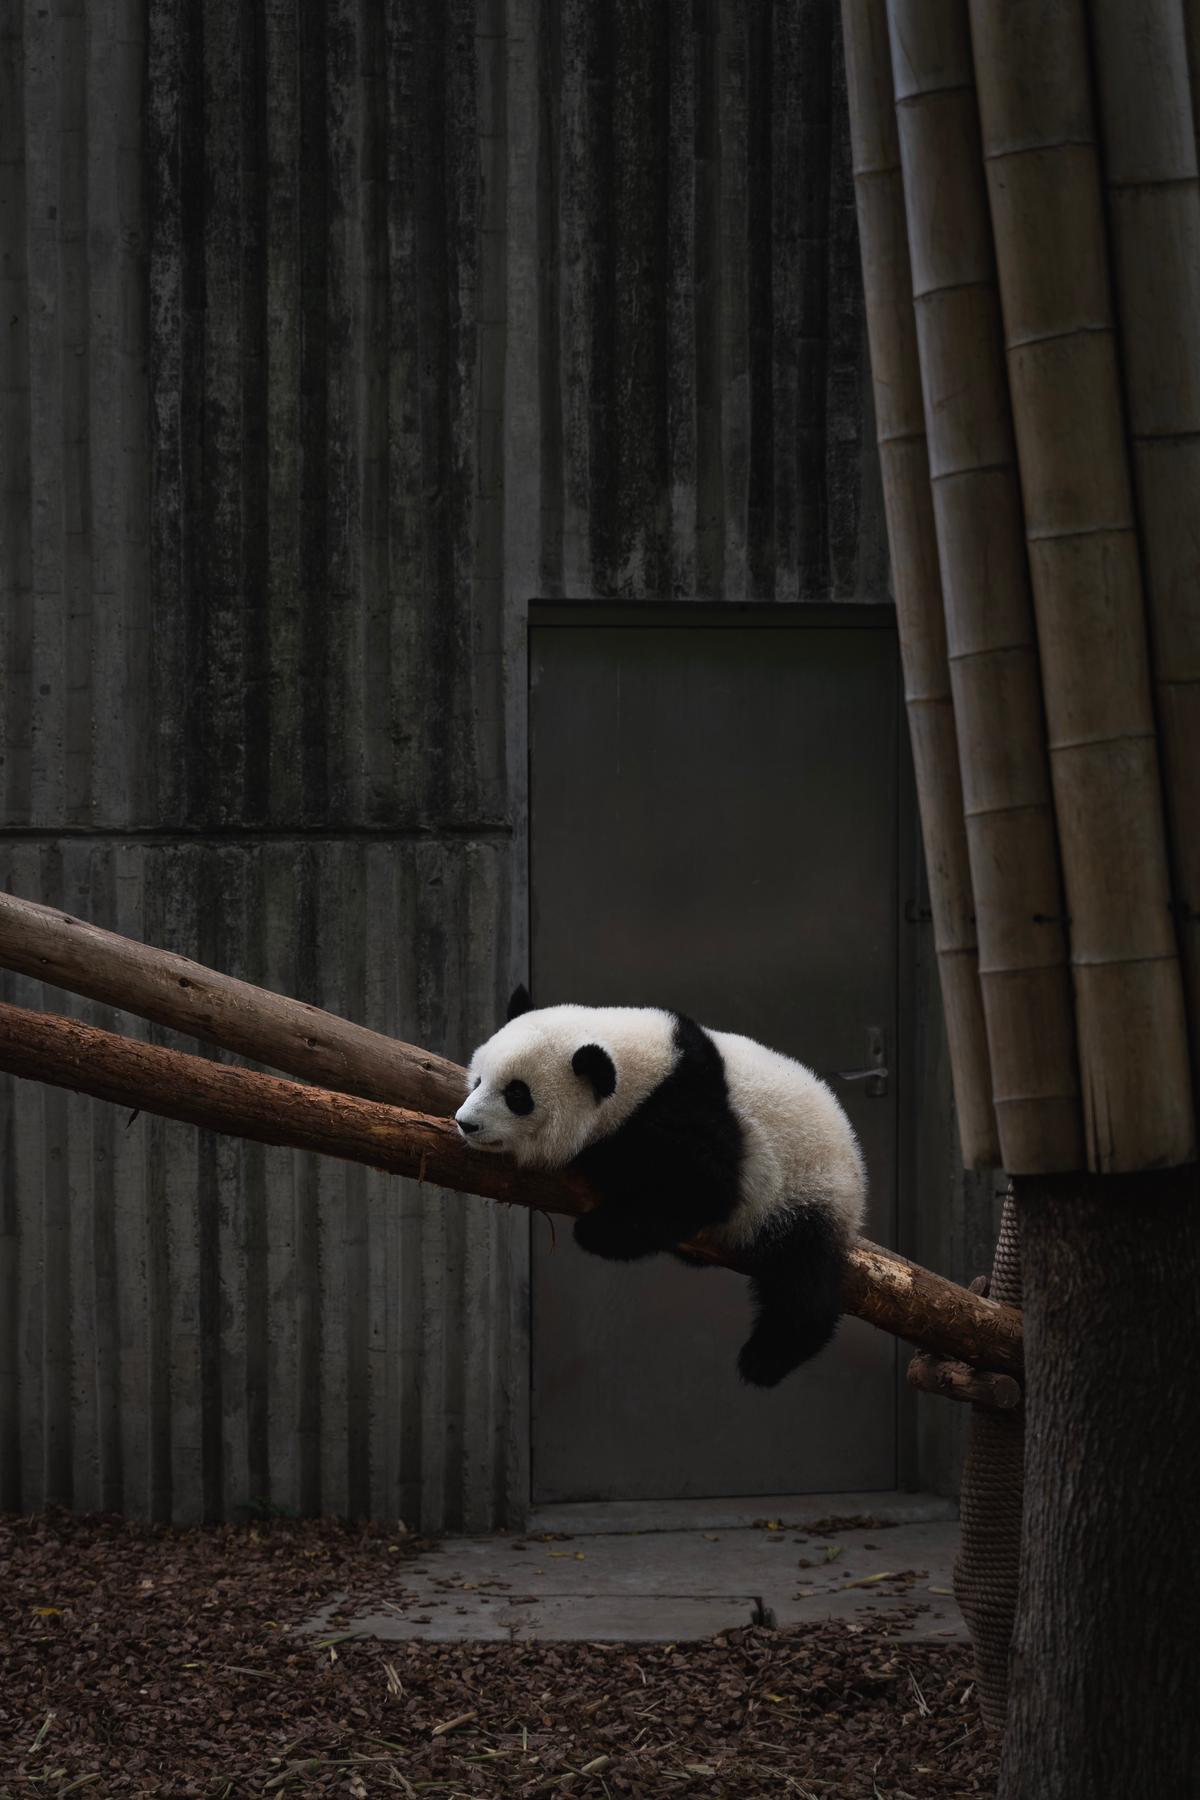 An image showing a panda eating bamboo in its natural habitat